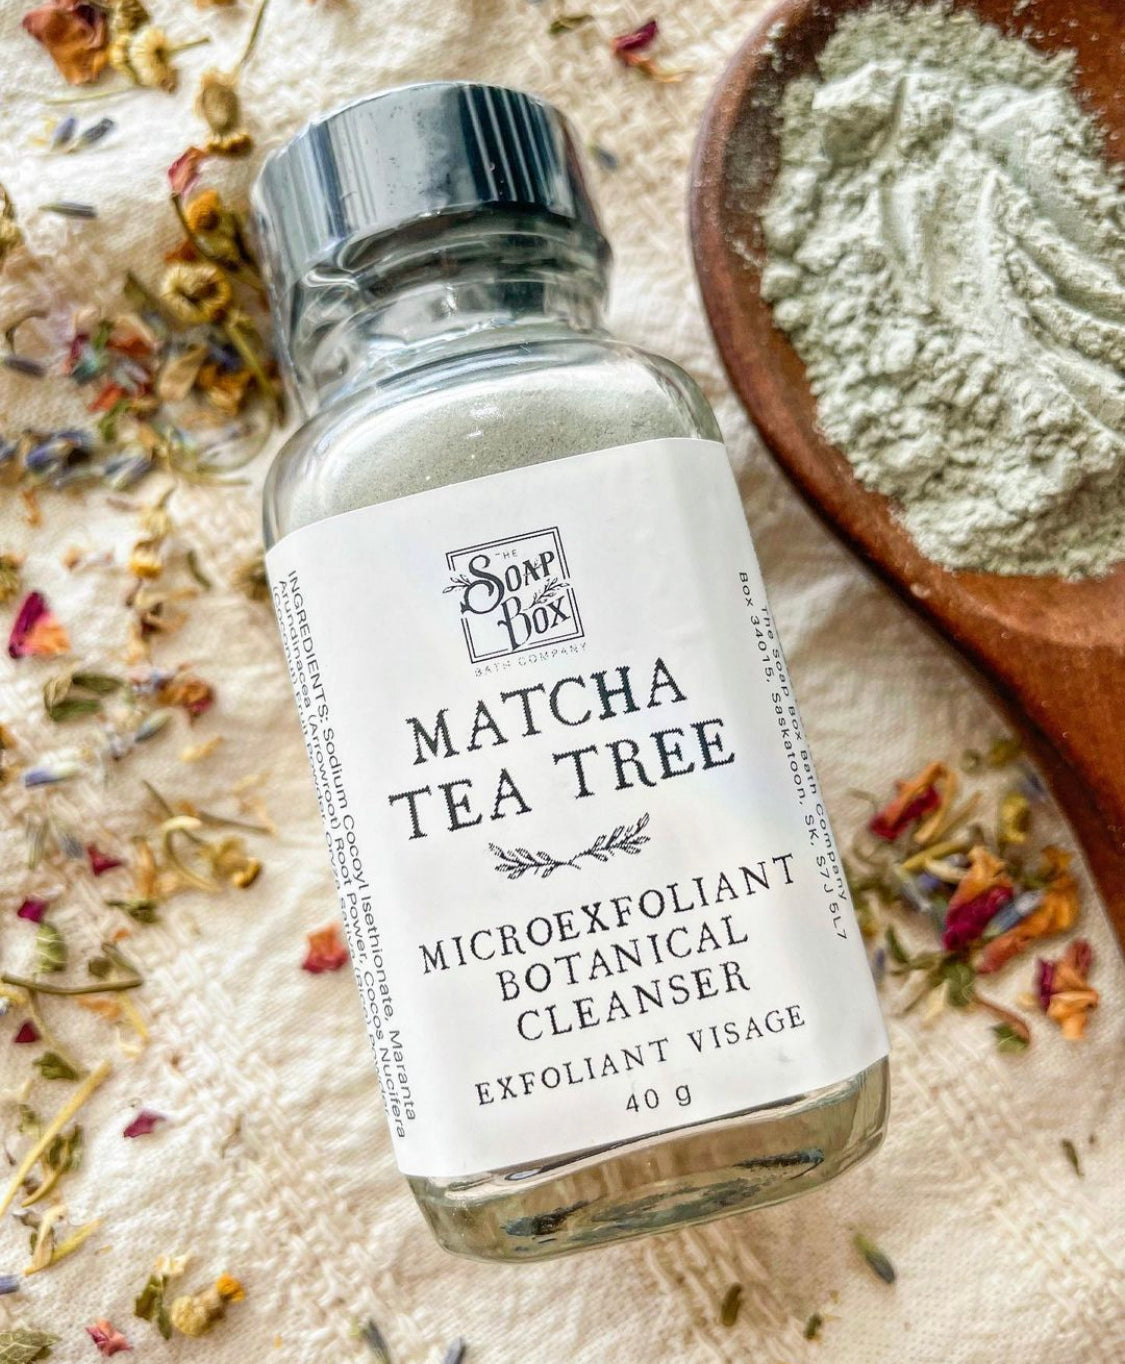 Matcha Tea Tree Microexfoliant Botanical Facial Cleanser